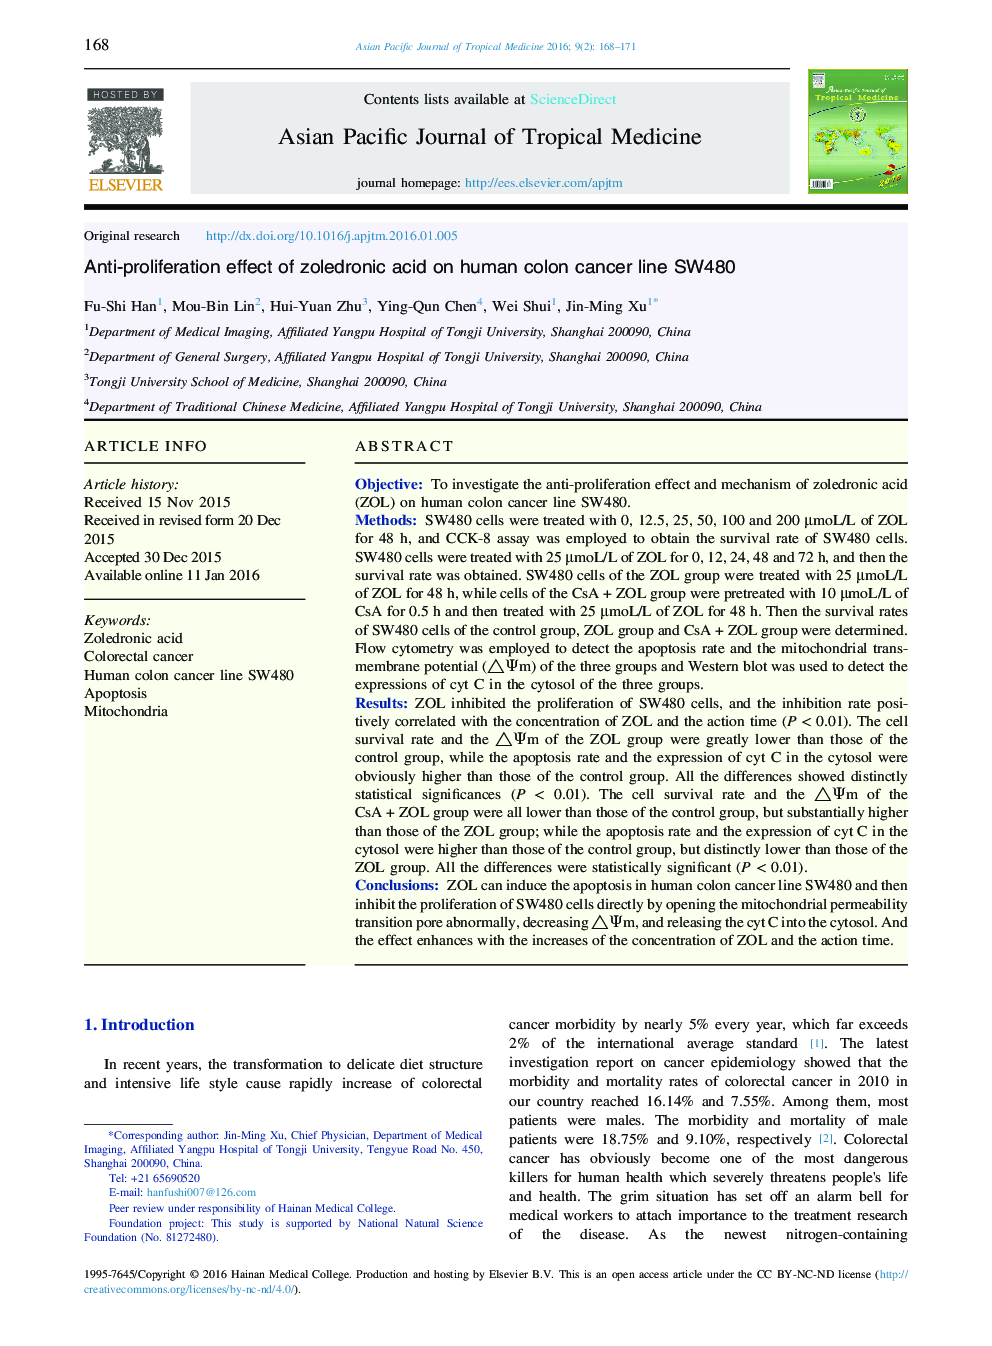 Anti-proliferation effect of zoledronic acid on human colon cancer line SW480 